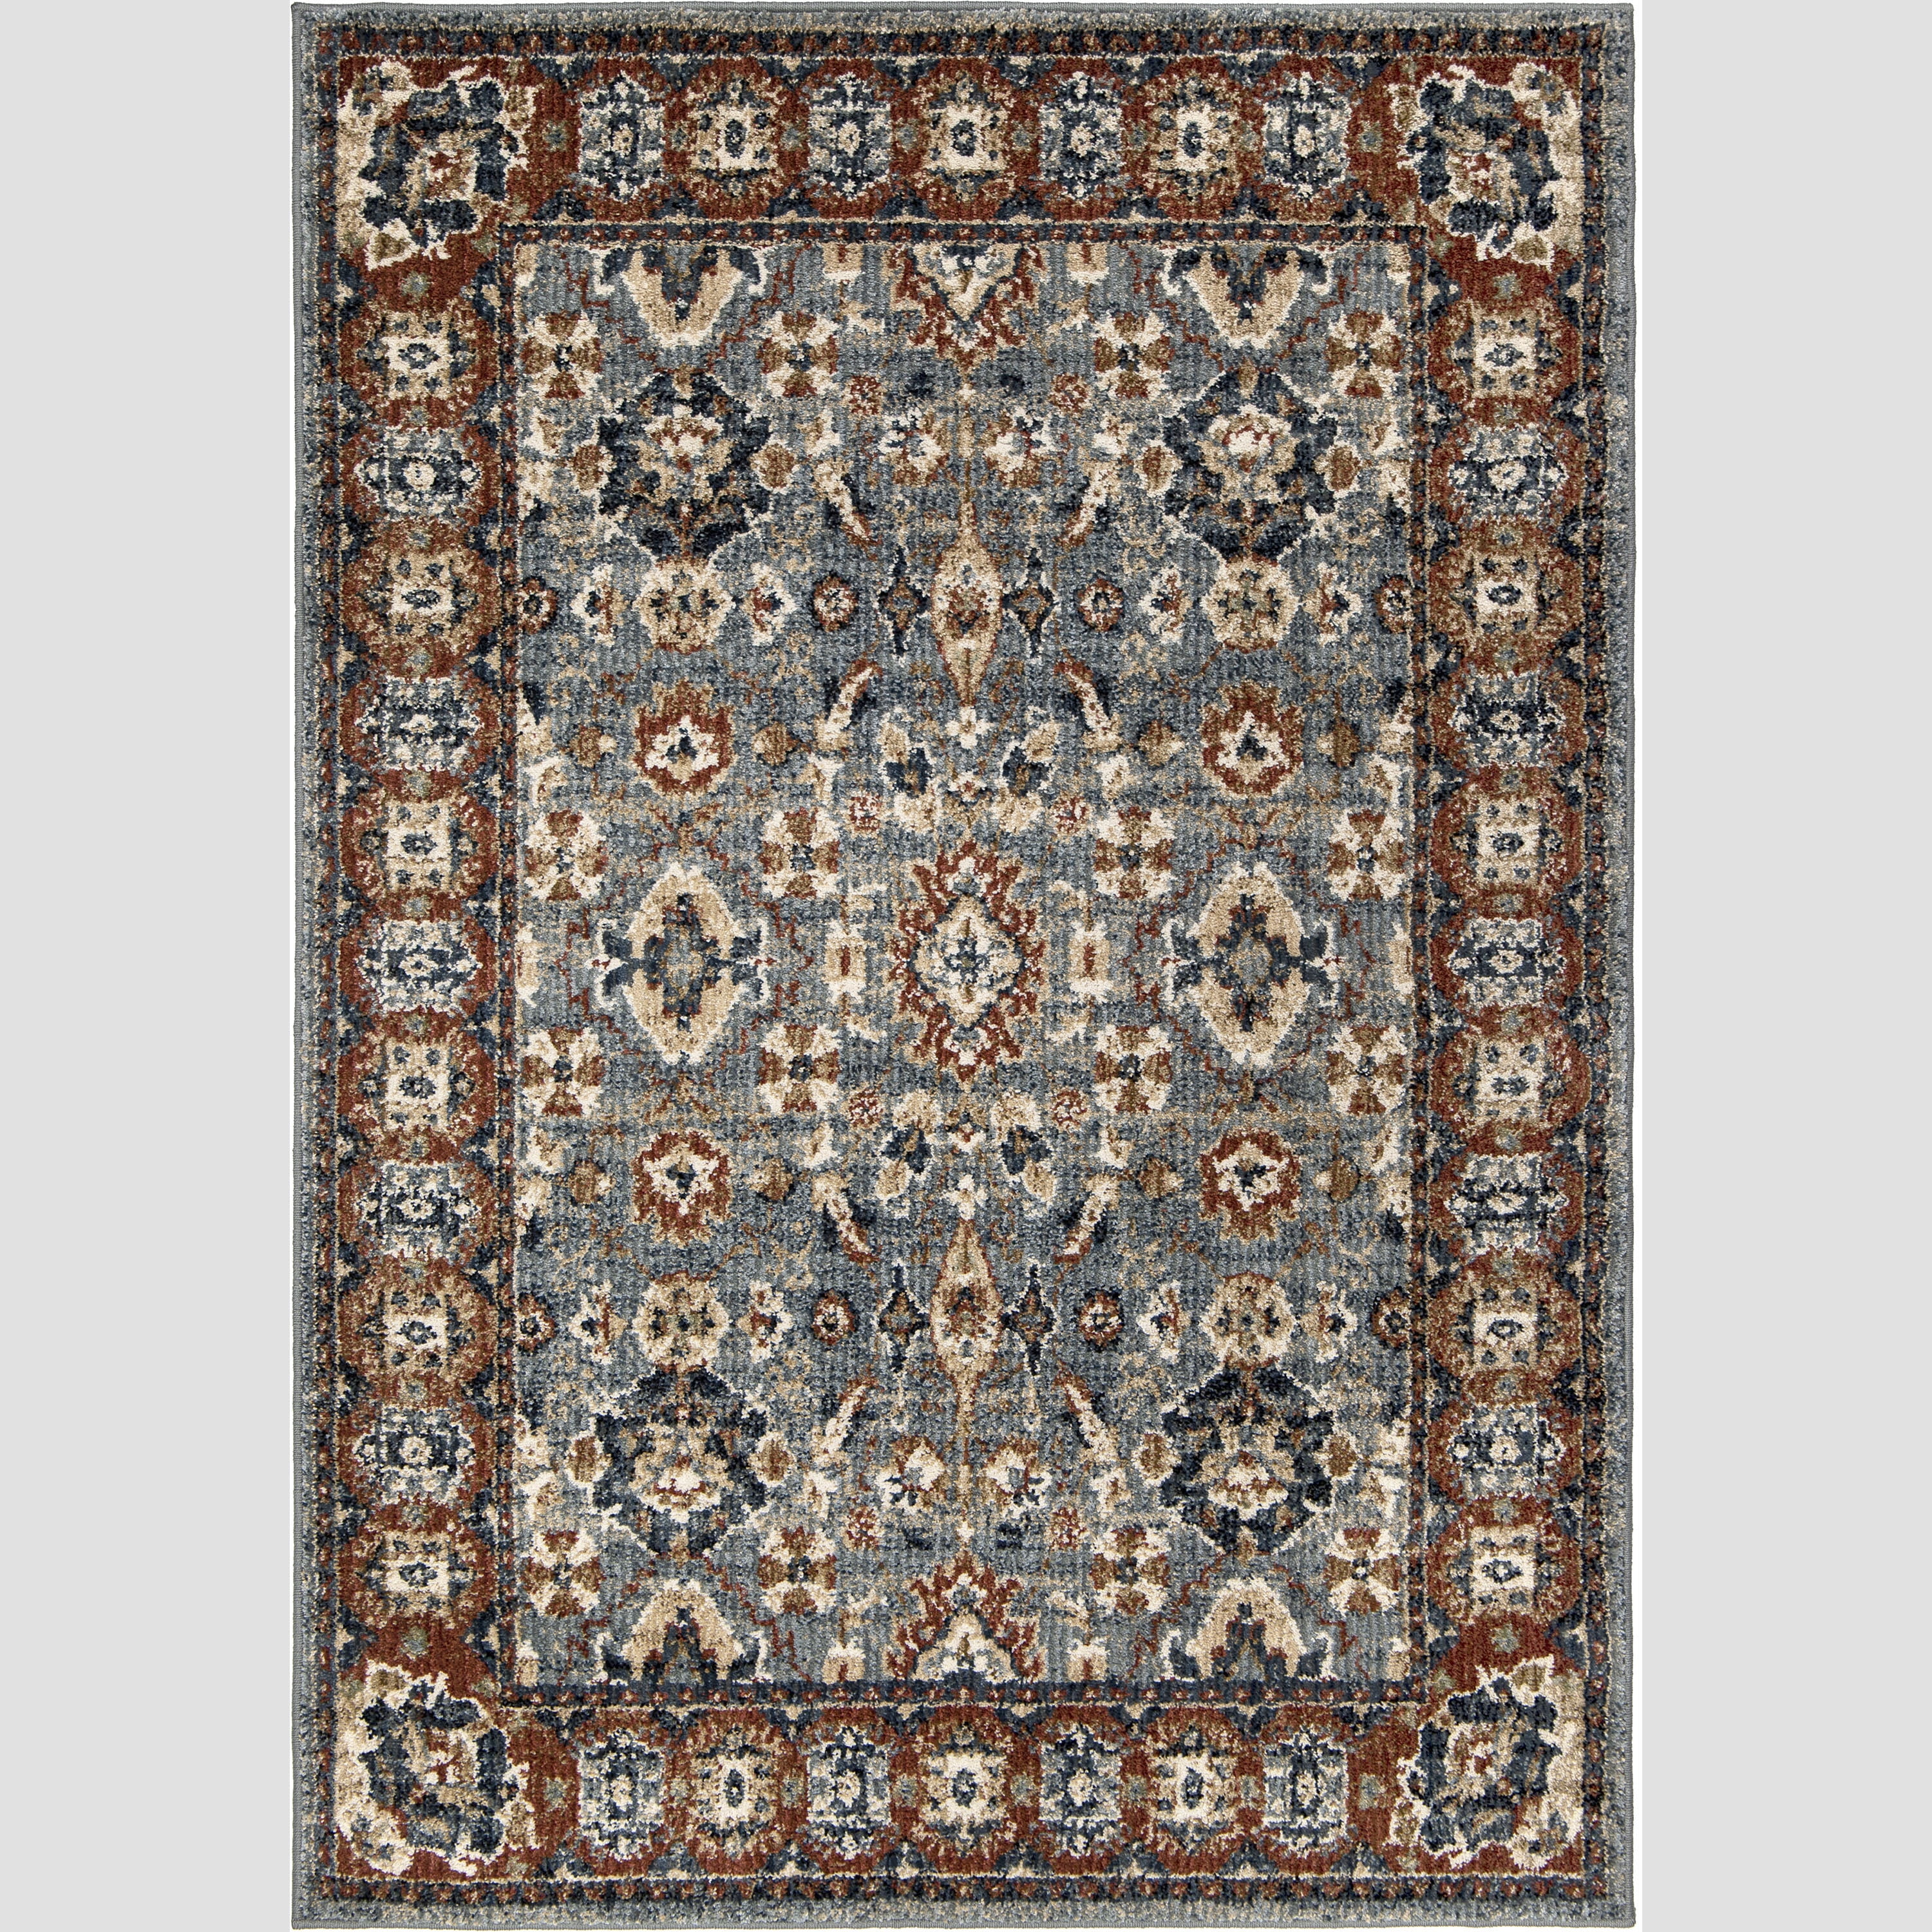 Home & Garden Traditional Persian Rug Extra Large Floor Carpet Mat Modern Design 